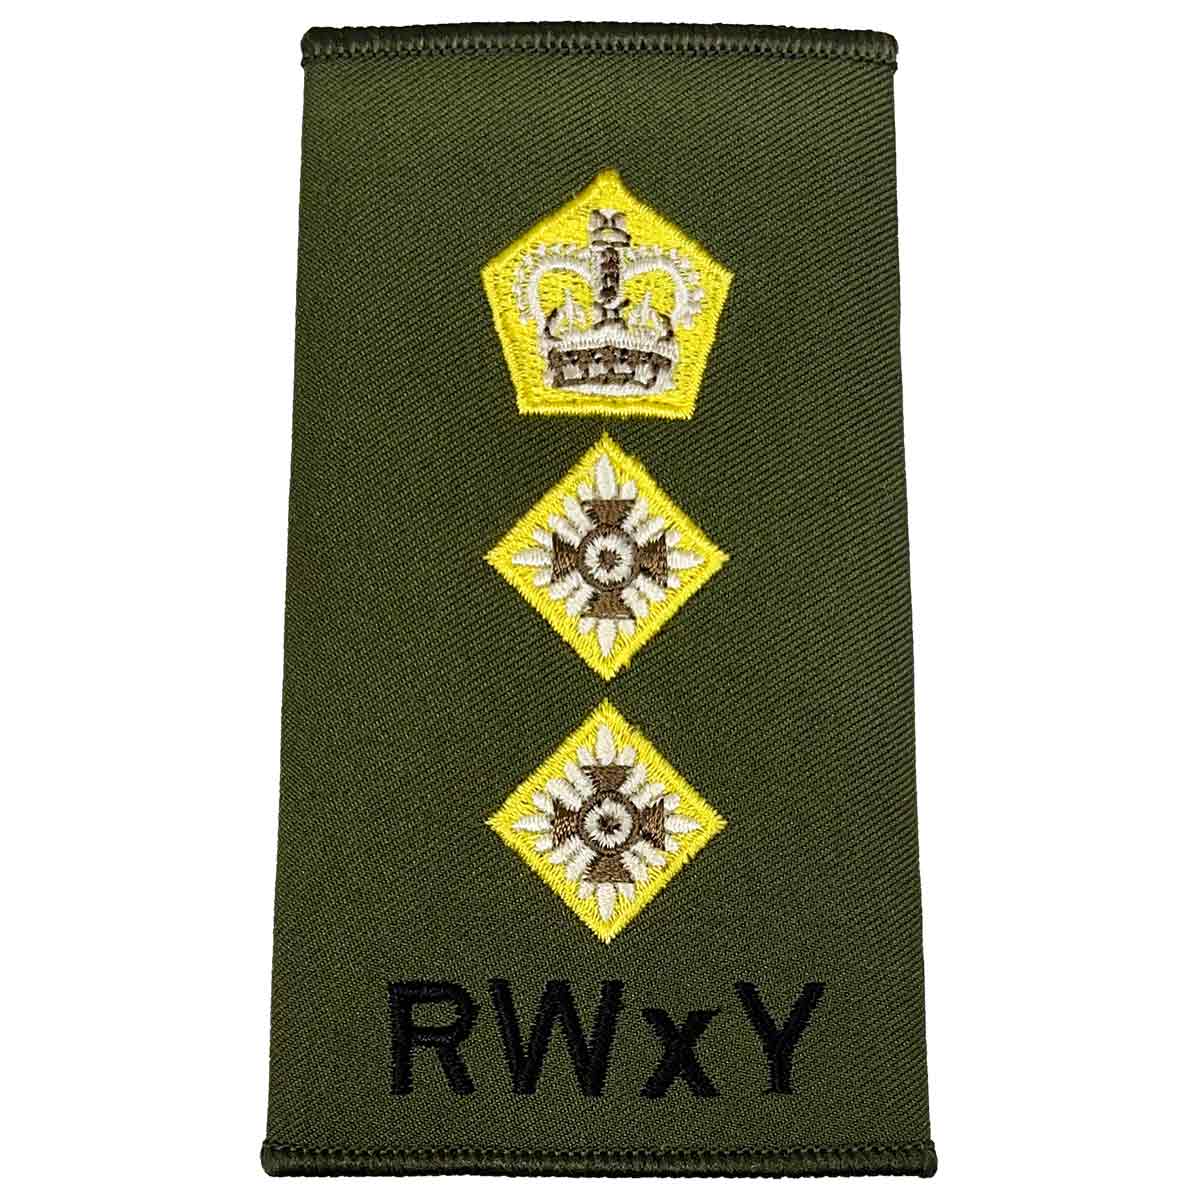 Royal Wessex Yeomanry (RWxY) Olive Green Rank Slides (Pair) - John Bull Clothing